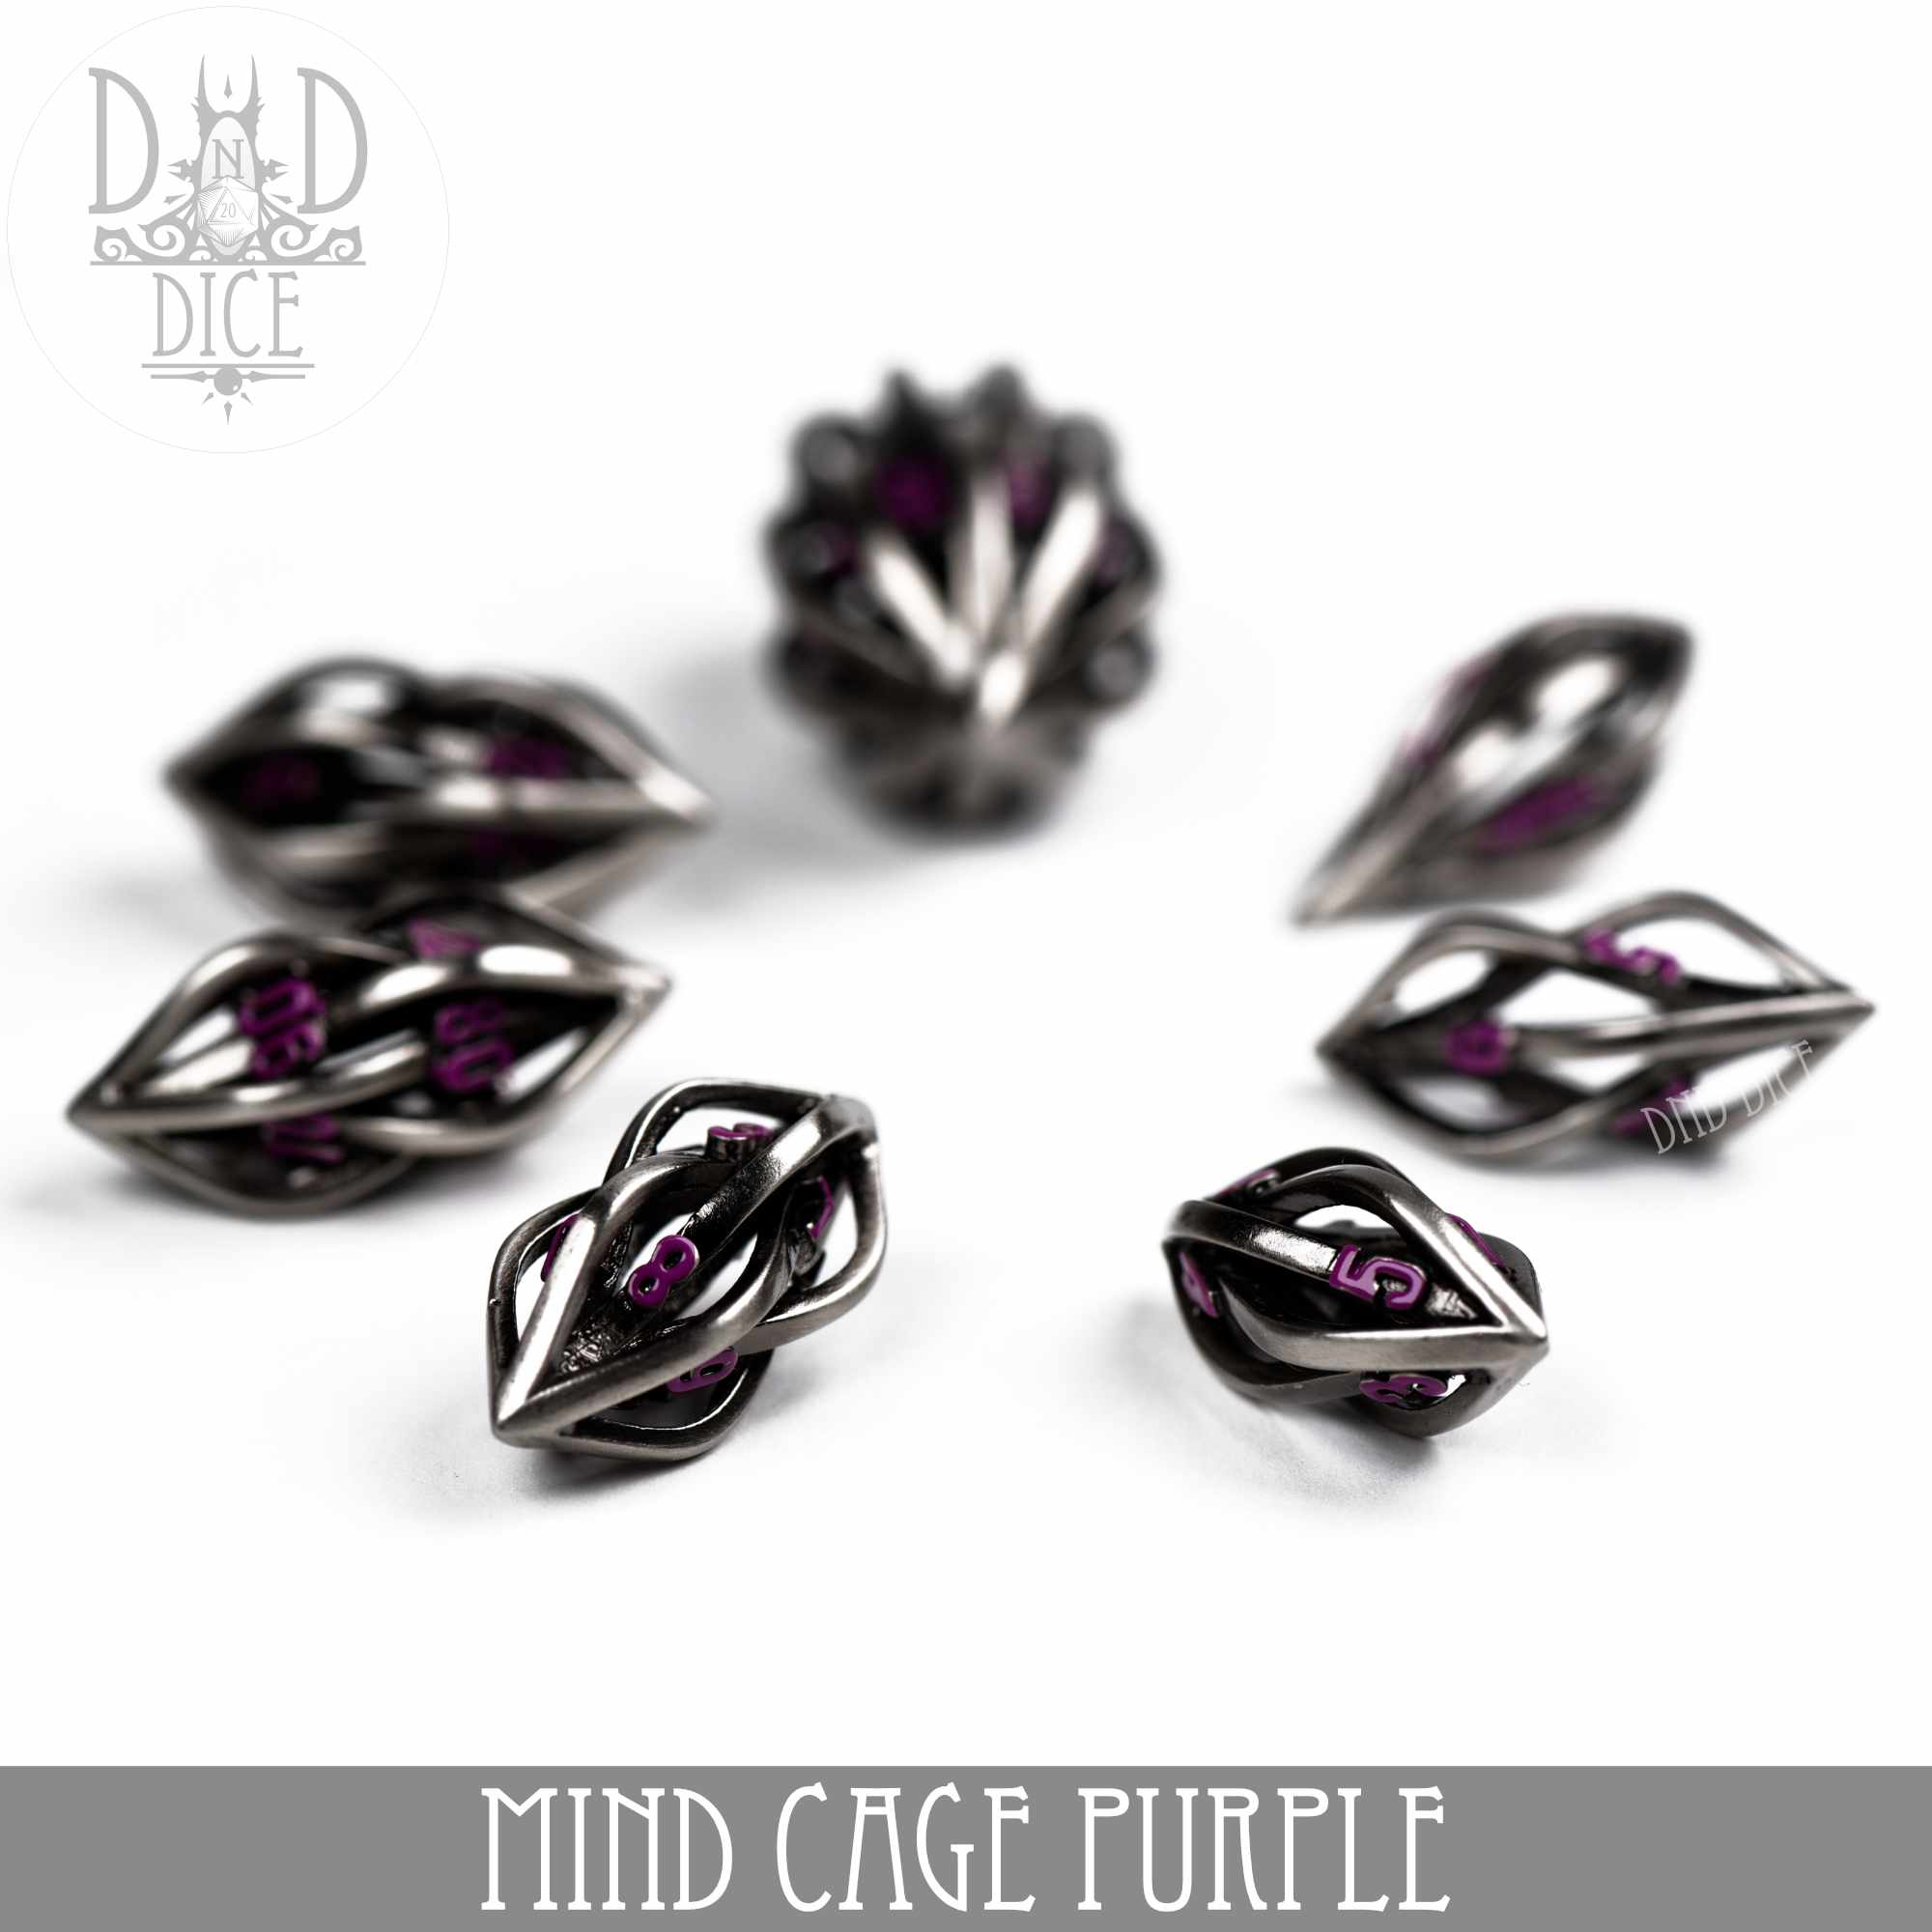 Mind Cage Purple - Metal Dice Set (Gift Box)